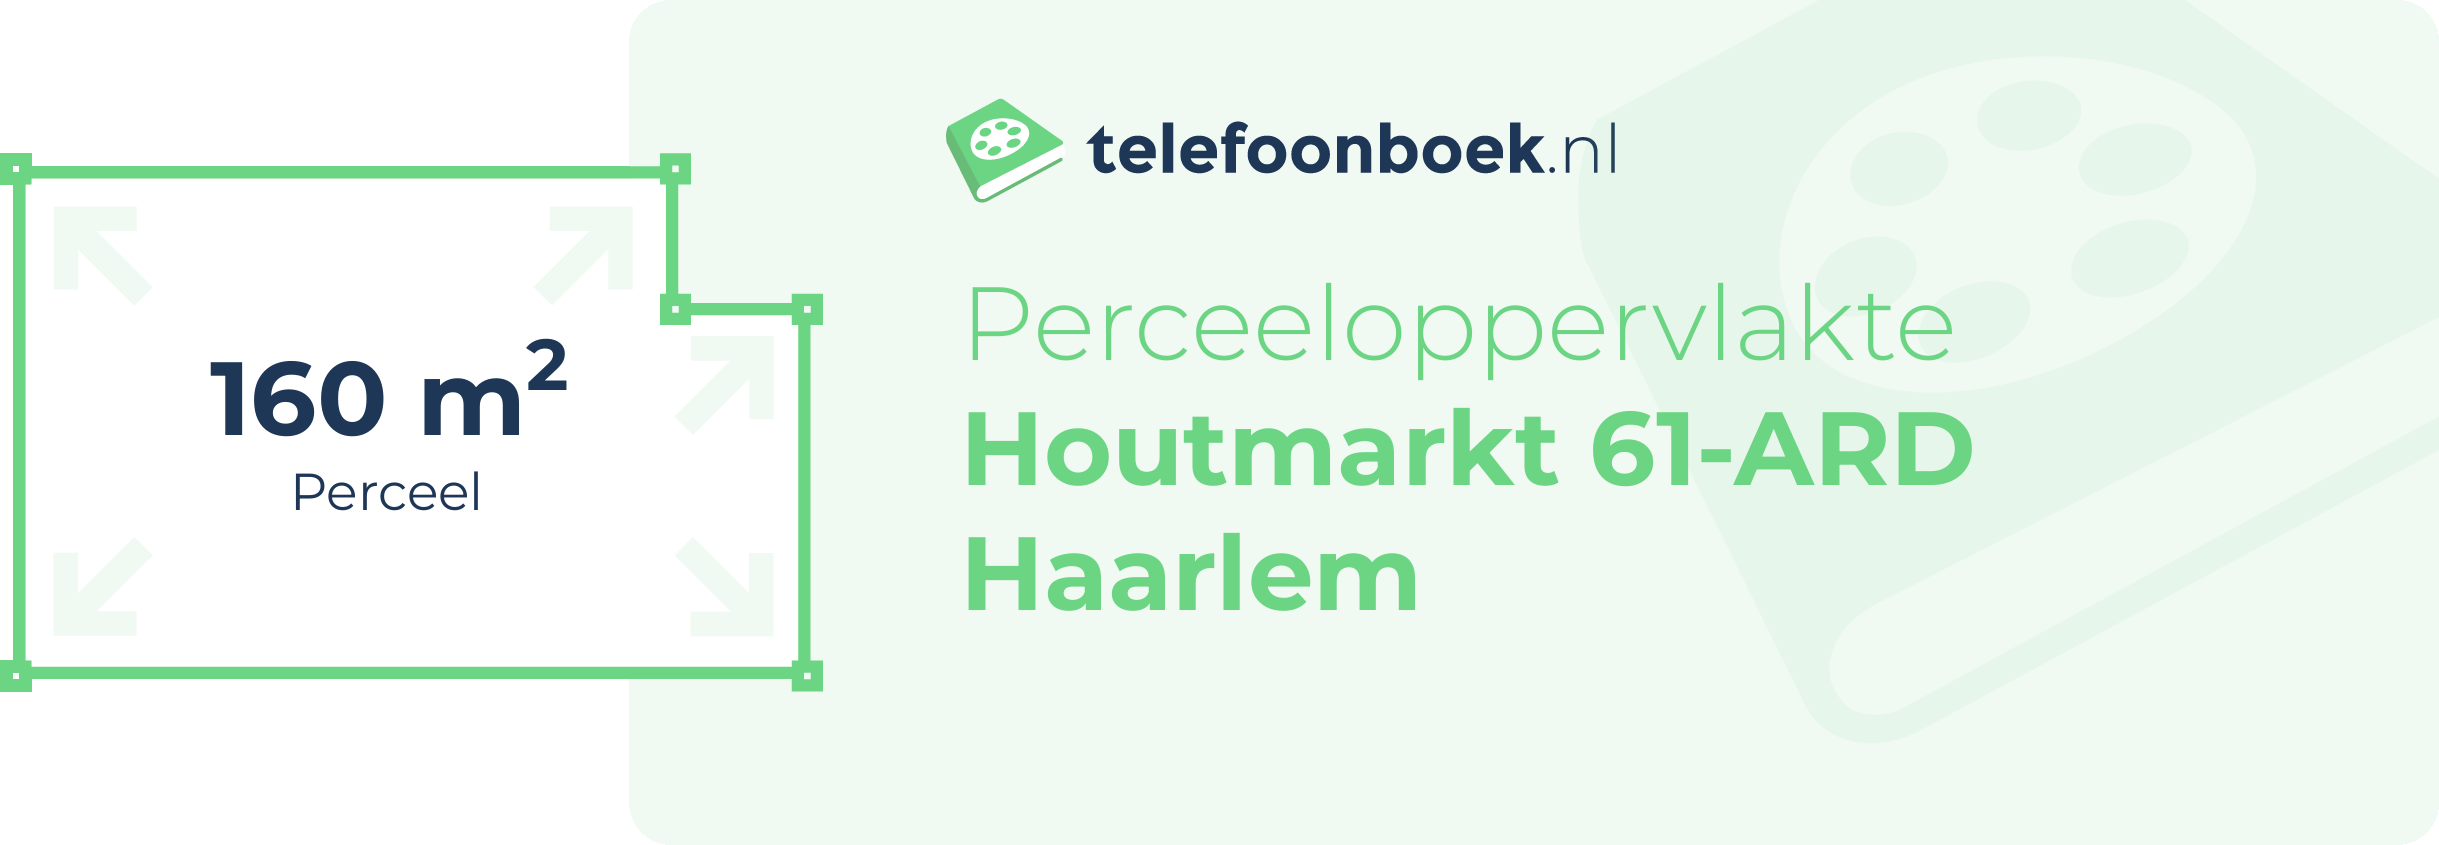 Perceeloppervlakte Houtmarkt 61-ARD Haarlem